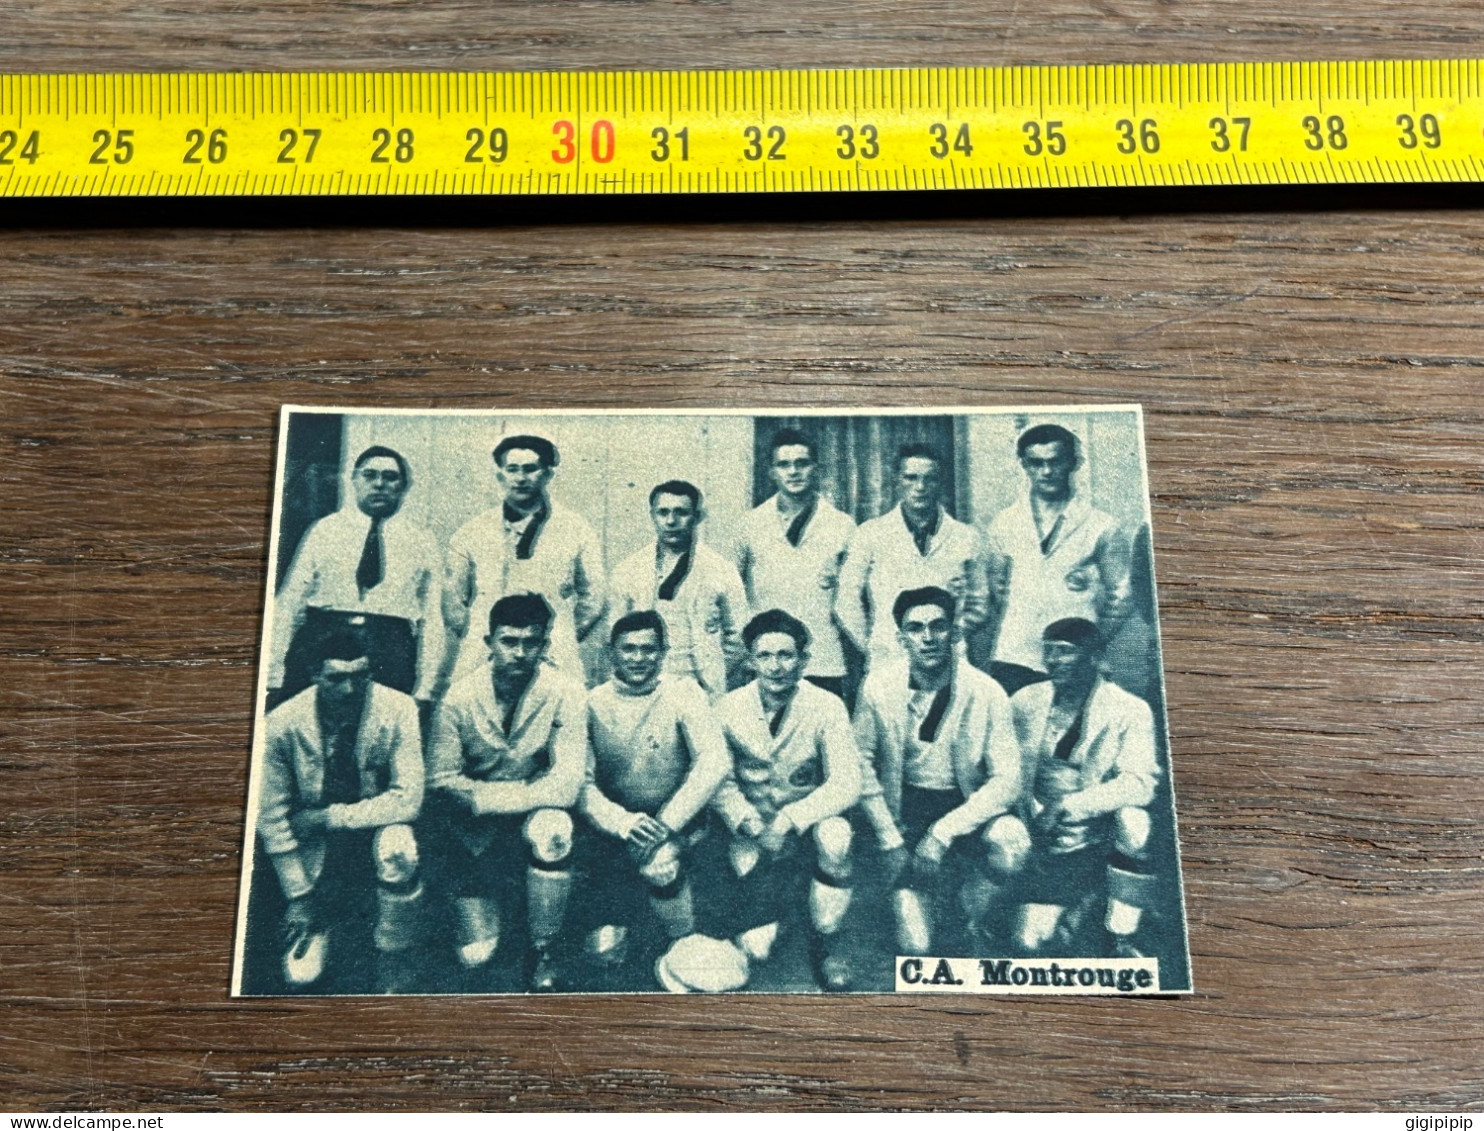 1928 MI équipe Football C.A. Montrouge - Collezioni